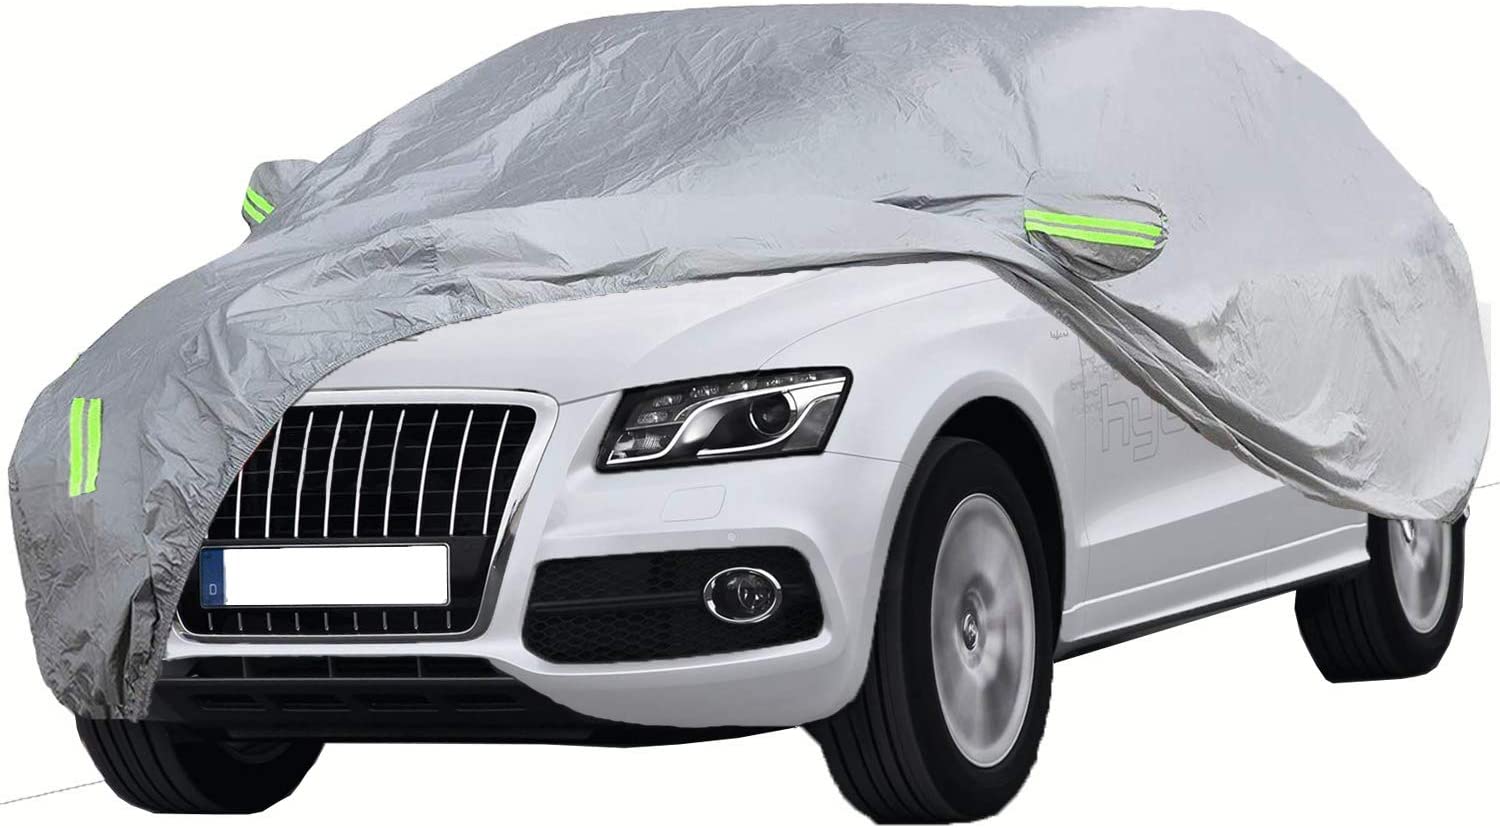 Addis Mercato > ELUTO SUV Car Cover Waterproof All Weather Full